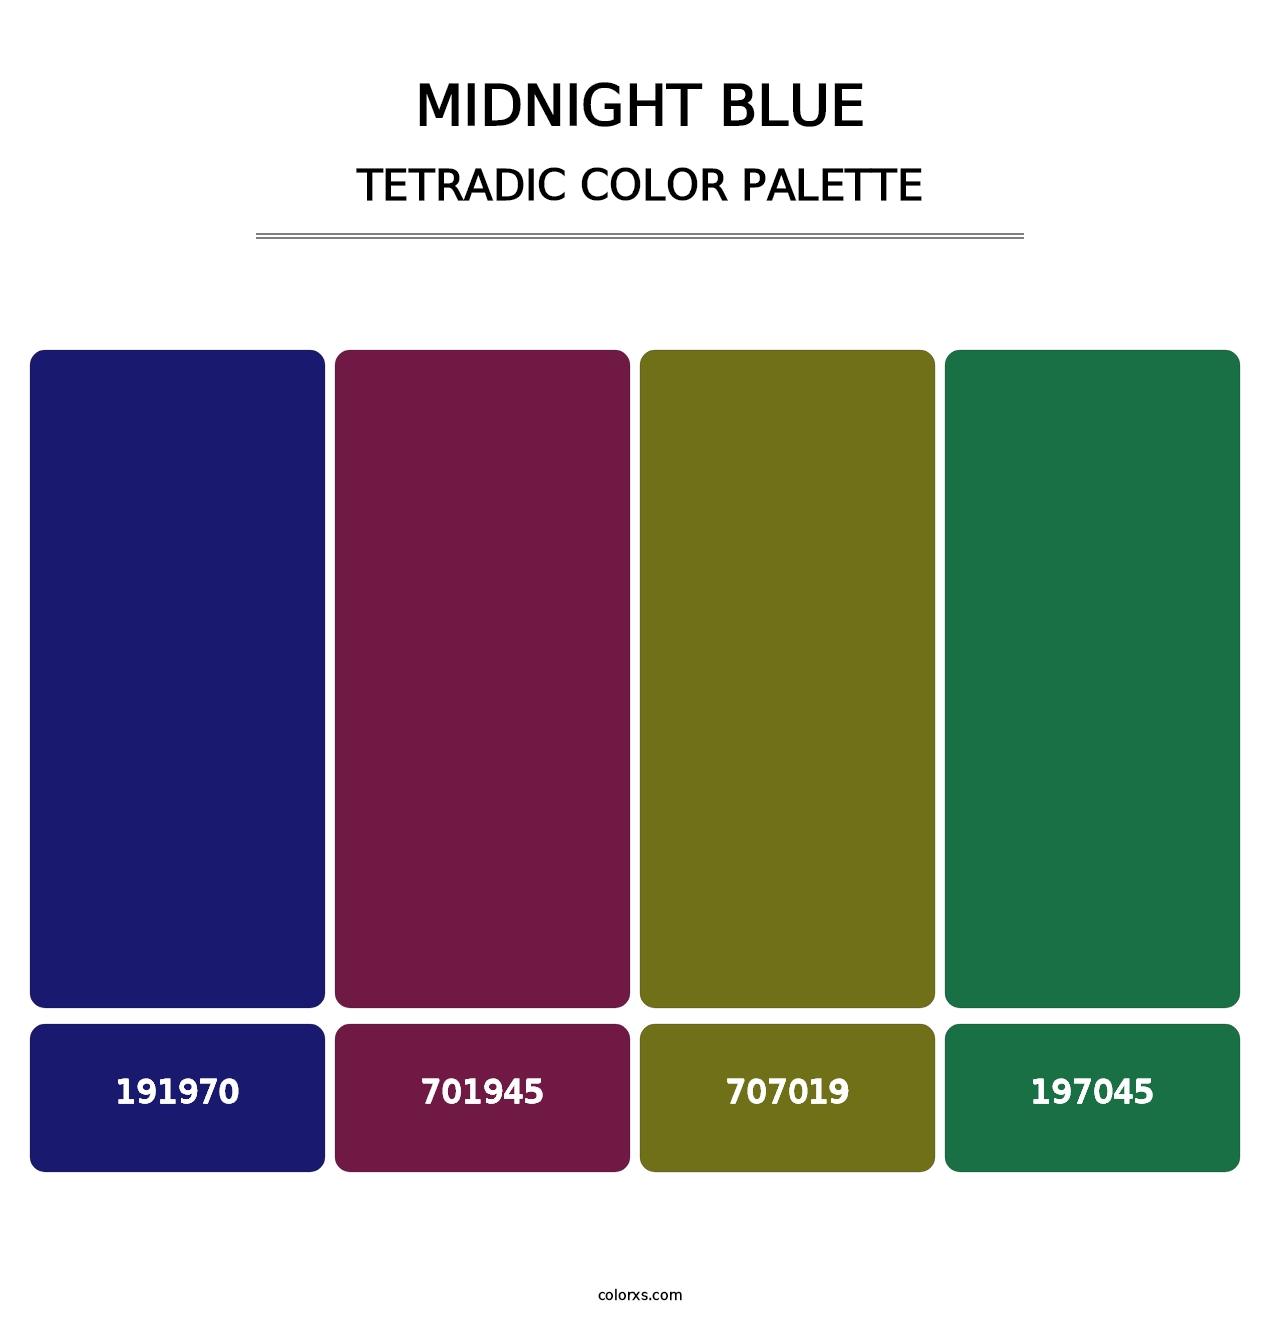 Midnight Blue - Tetradic Color Palette